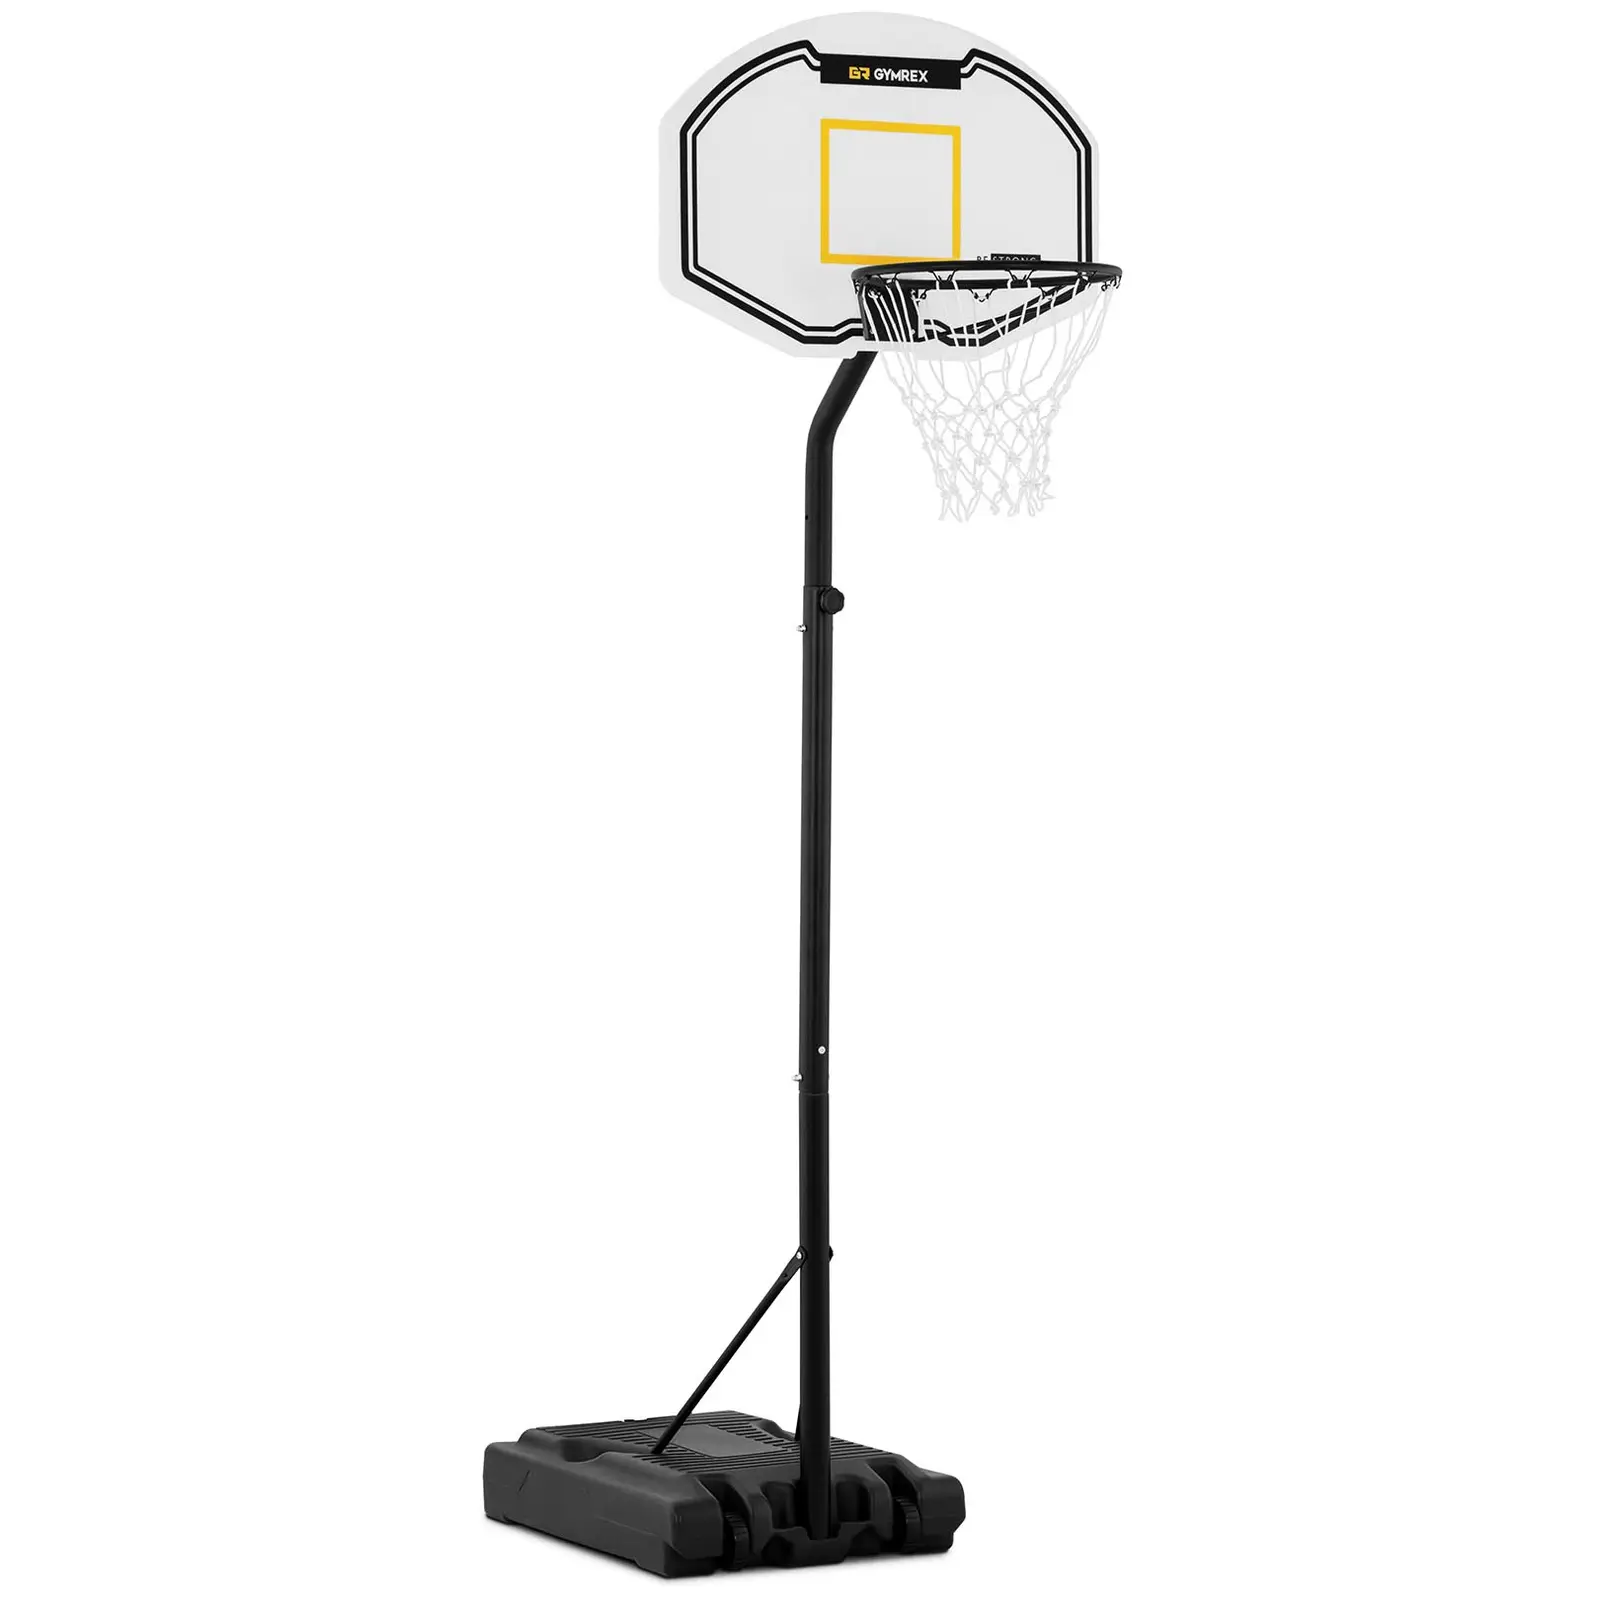 Canasta de baloncesto con soporte - regulable en altura - de 190 a 260 cm